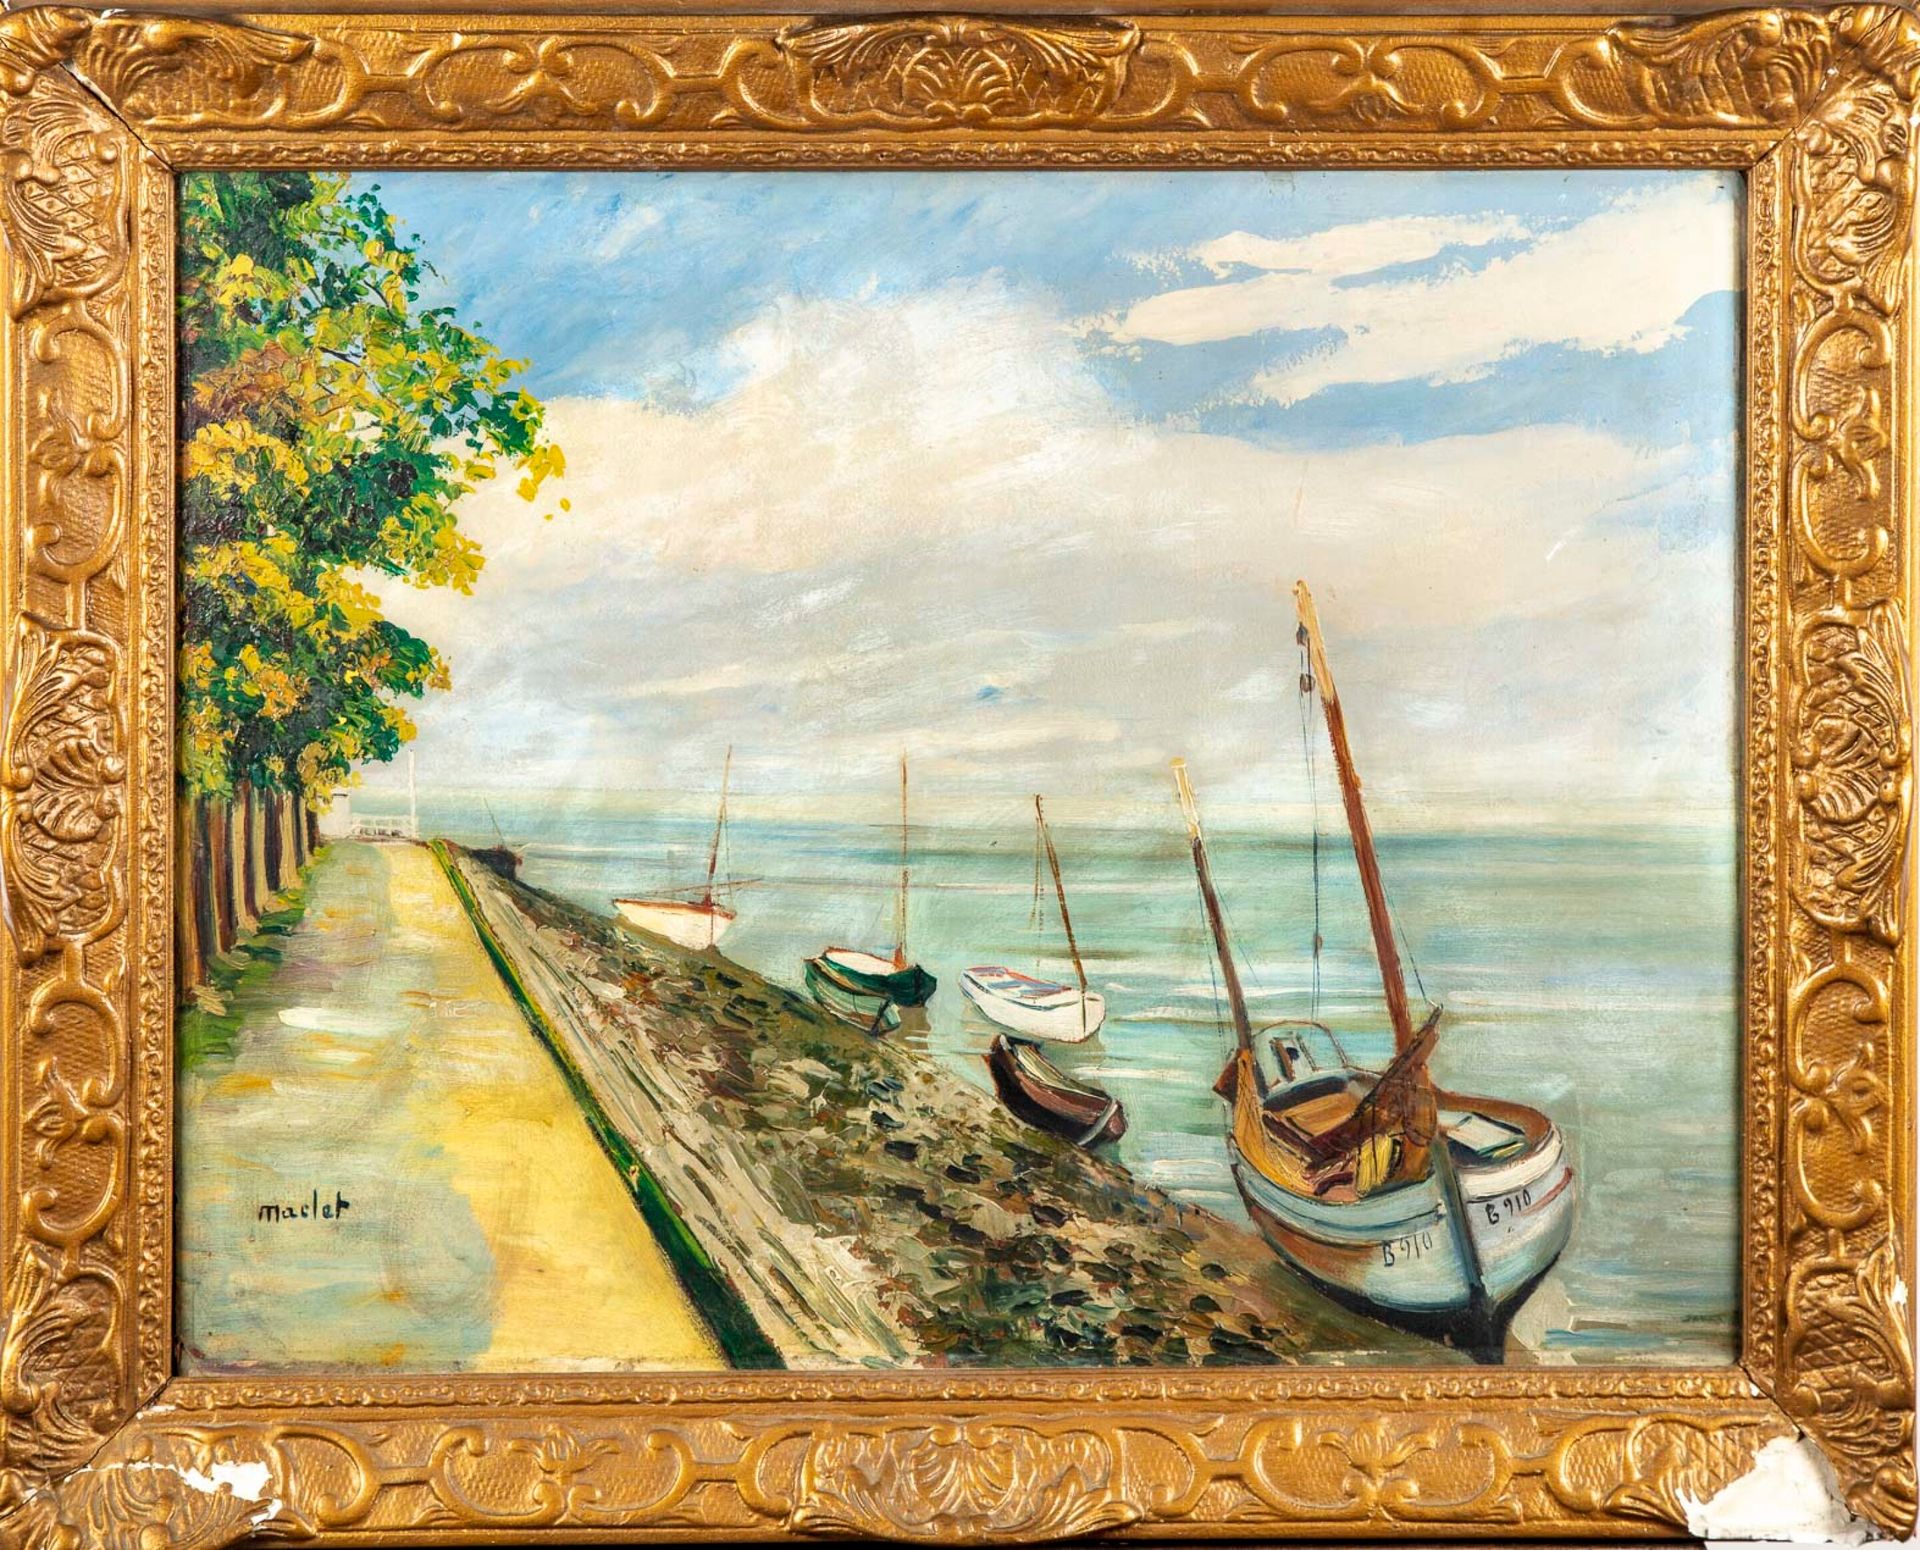 Élisée MACLET 埃利塞-马克莱(1881-1962)

海边的帆船

纸板上的油彩

左下方有签名

49 x 63 cm

框架的损坏